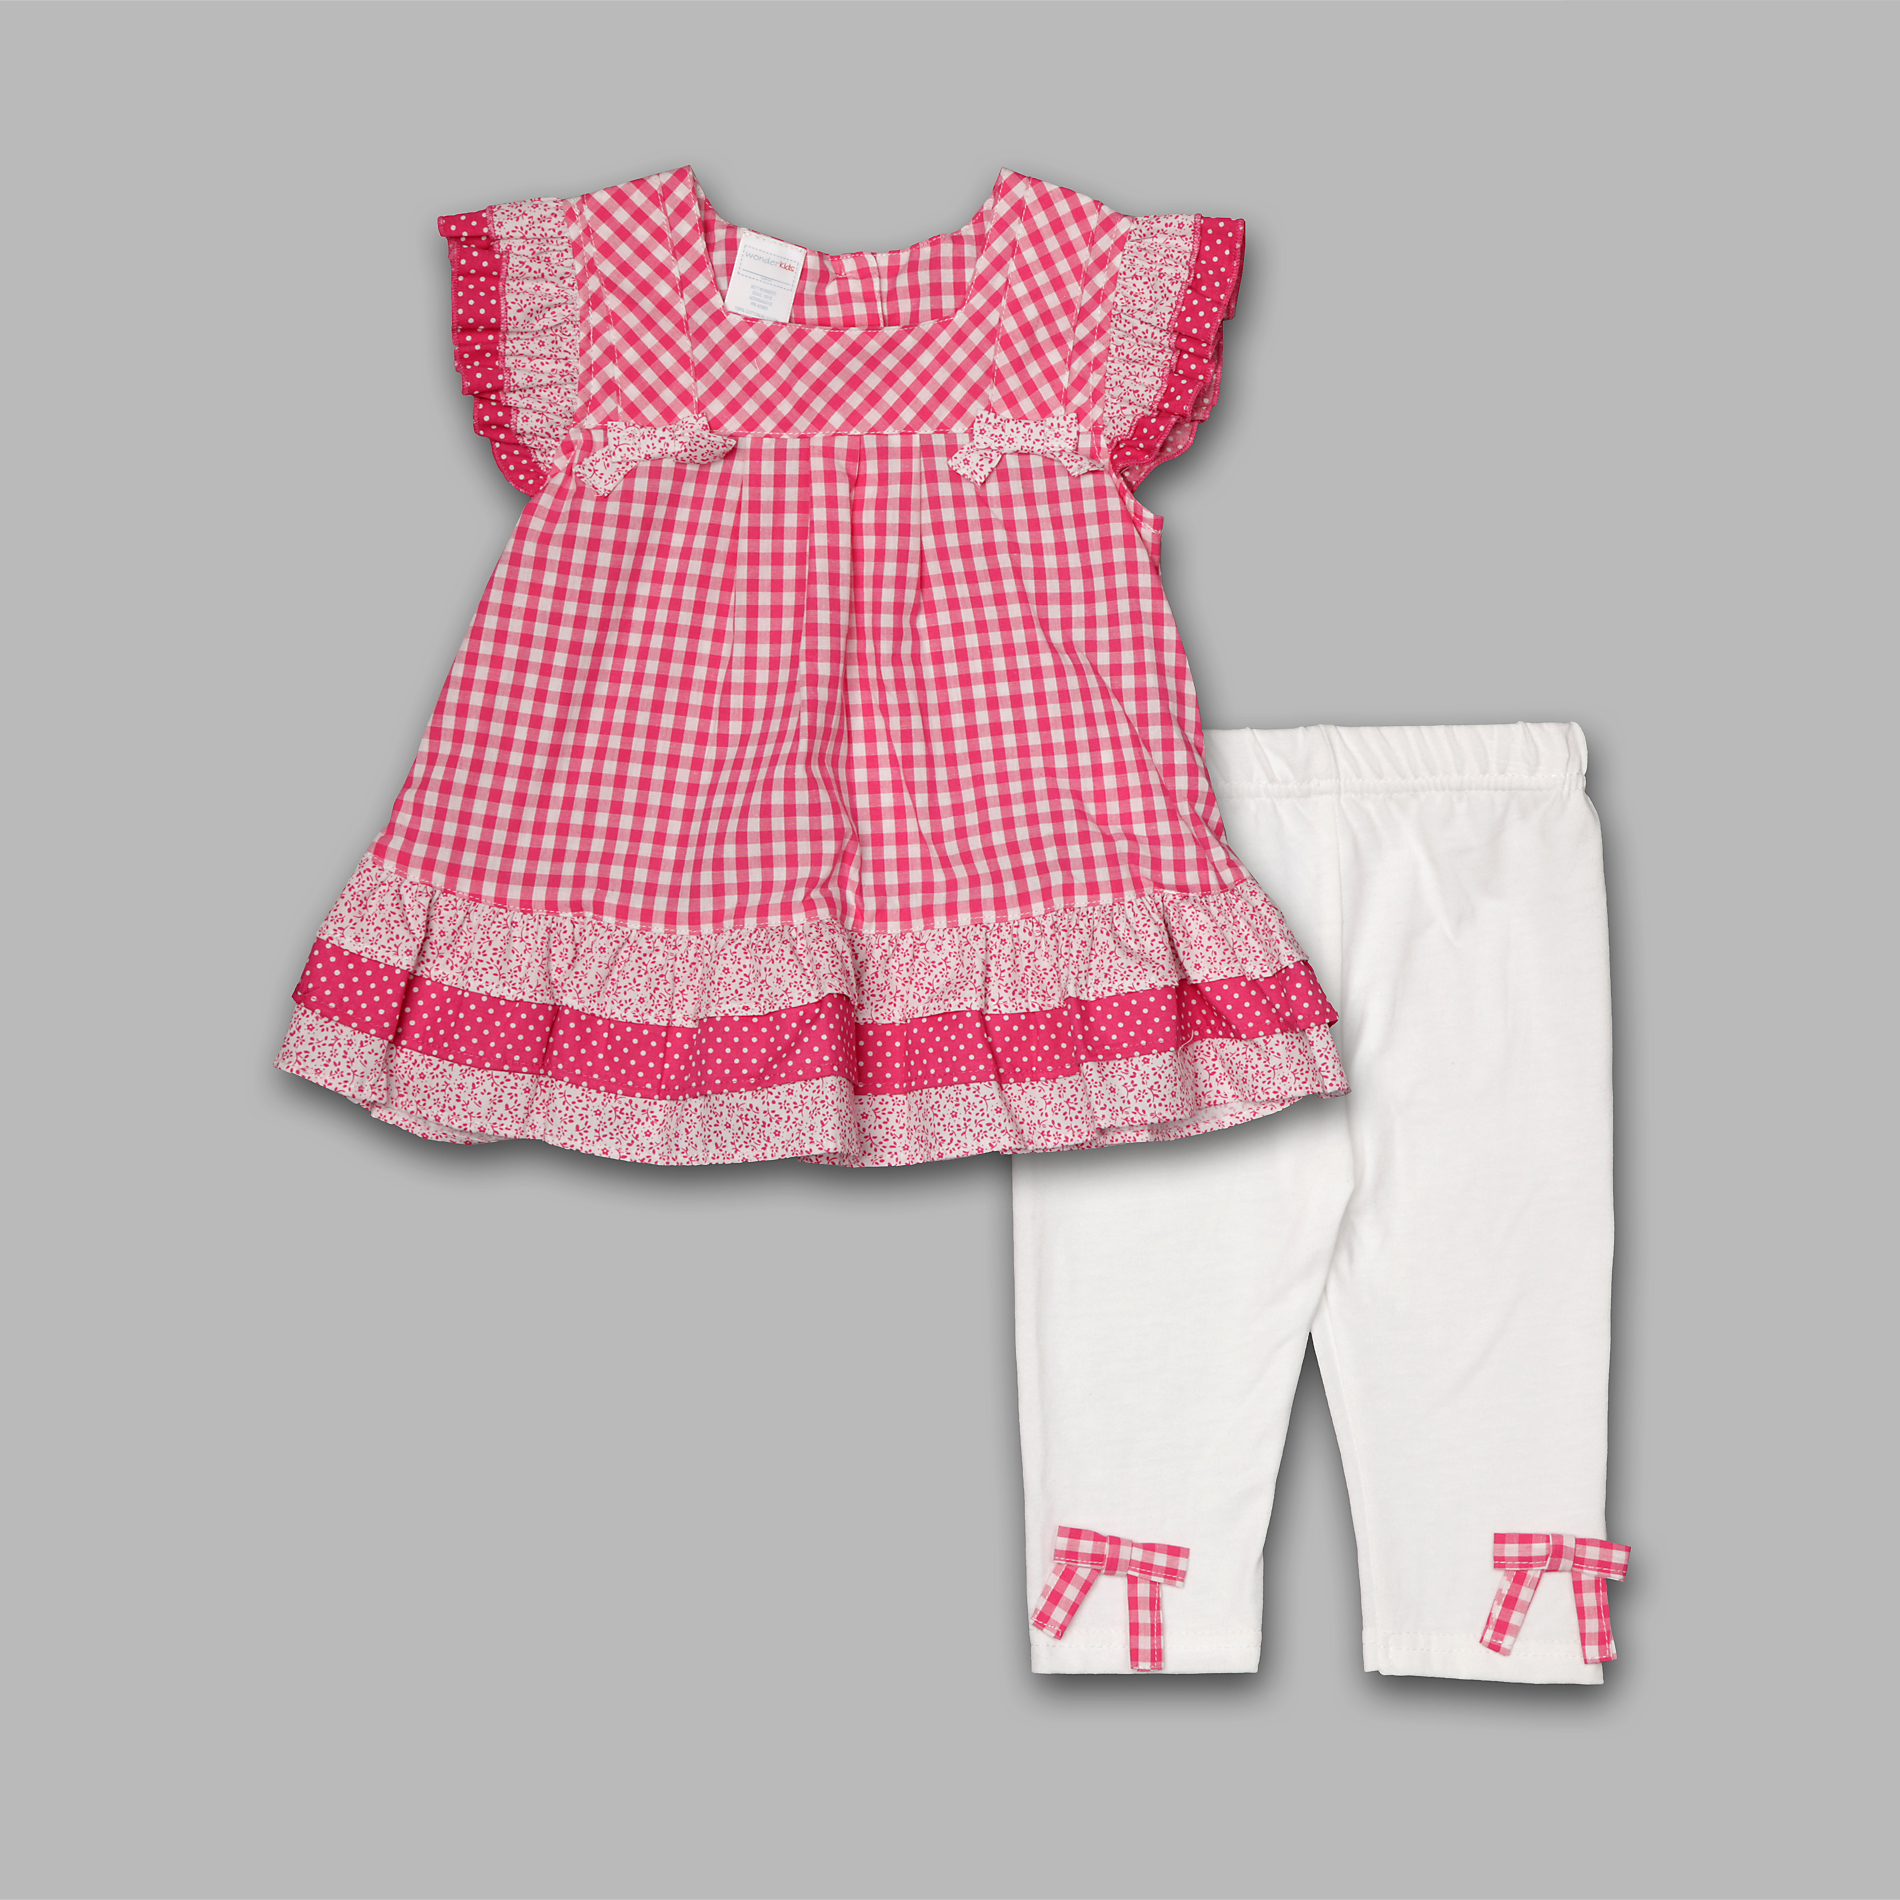 WonderKids Infant & Toddler Girl's 2 Pc Gingham Top & Pants Set